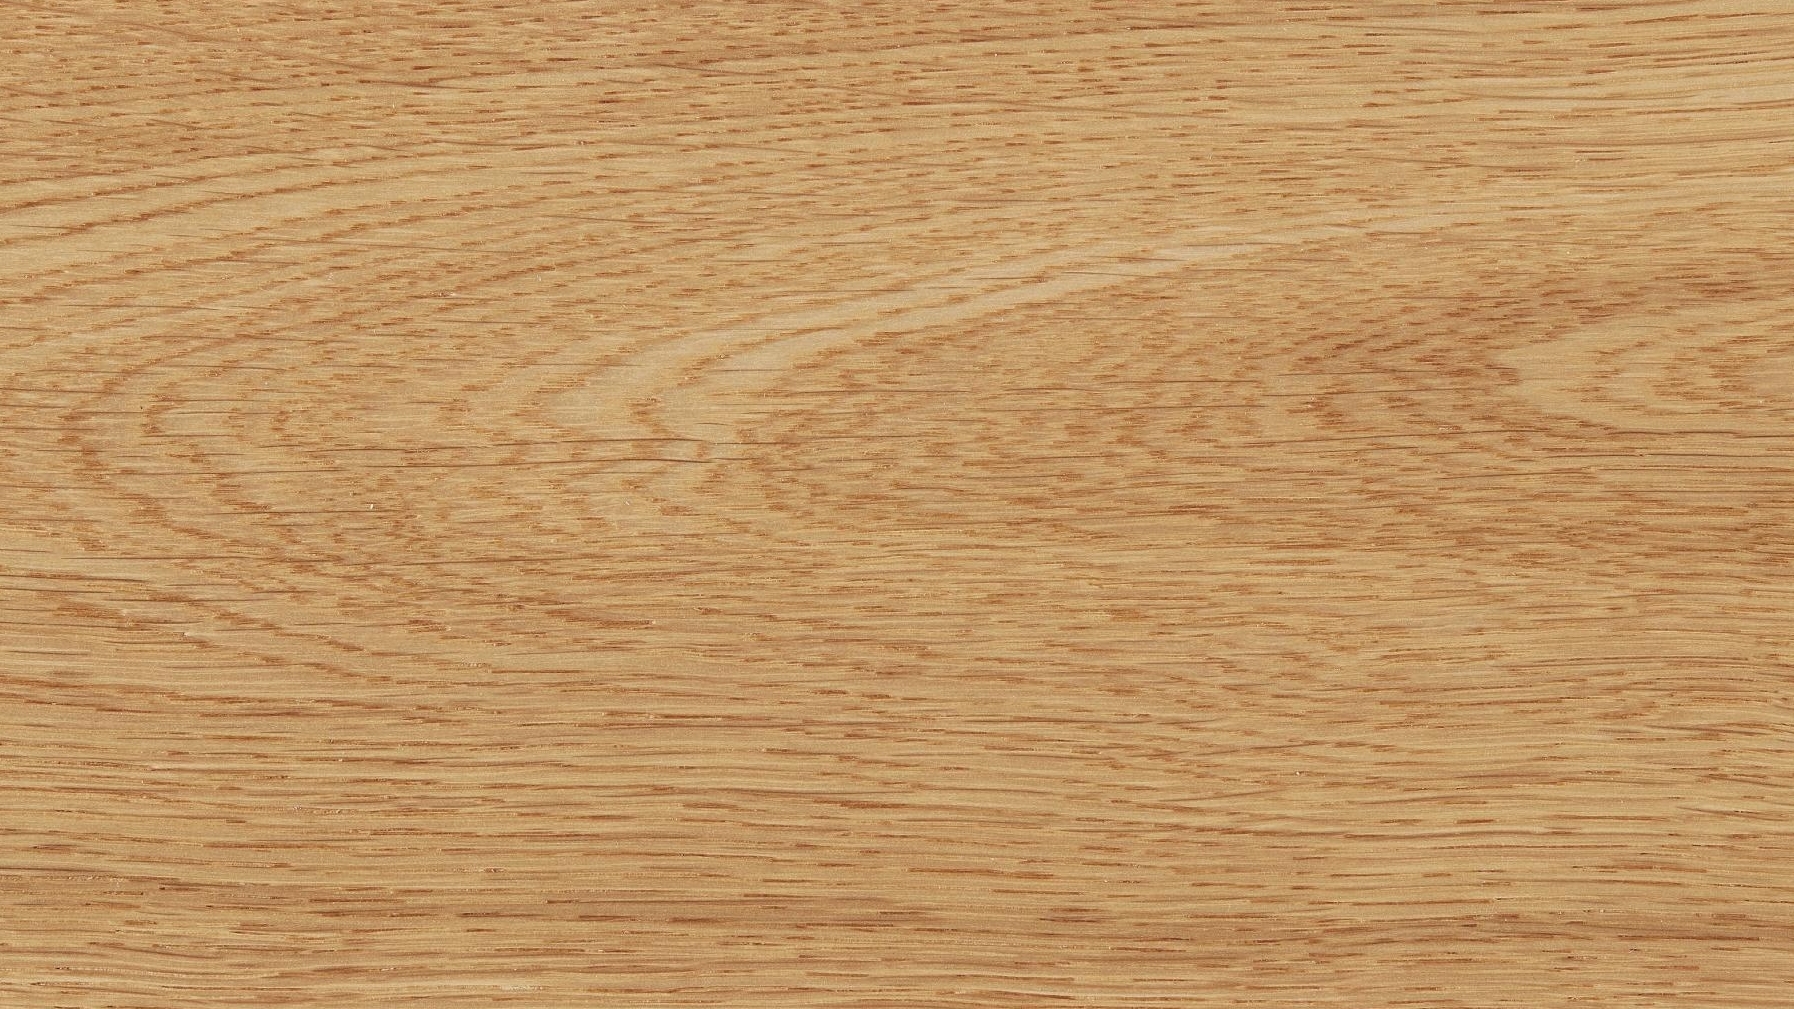 Buy Topgrain Oak Timber Flooring Amalfi Harvey Norman Au